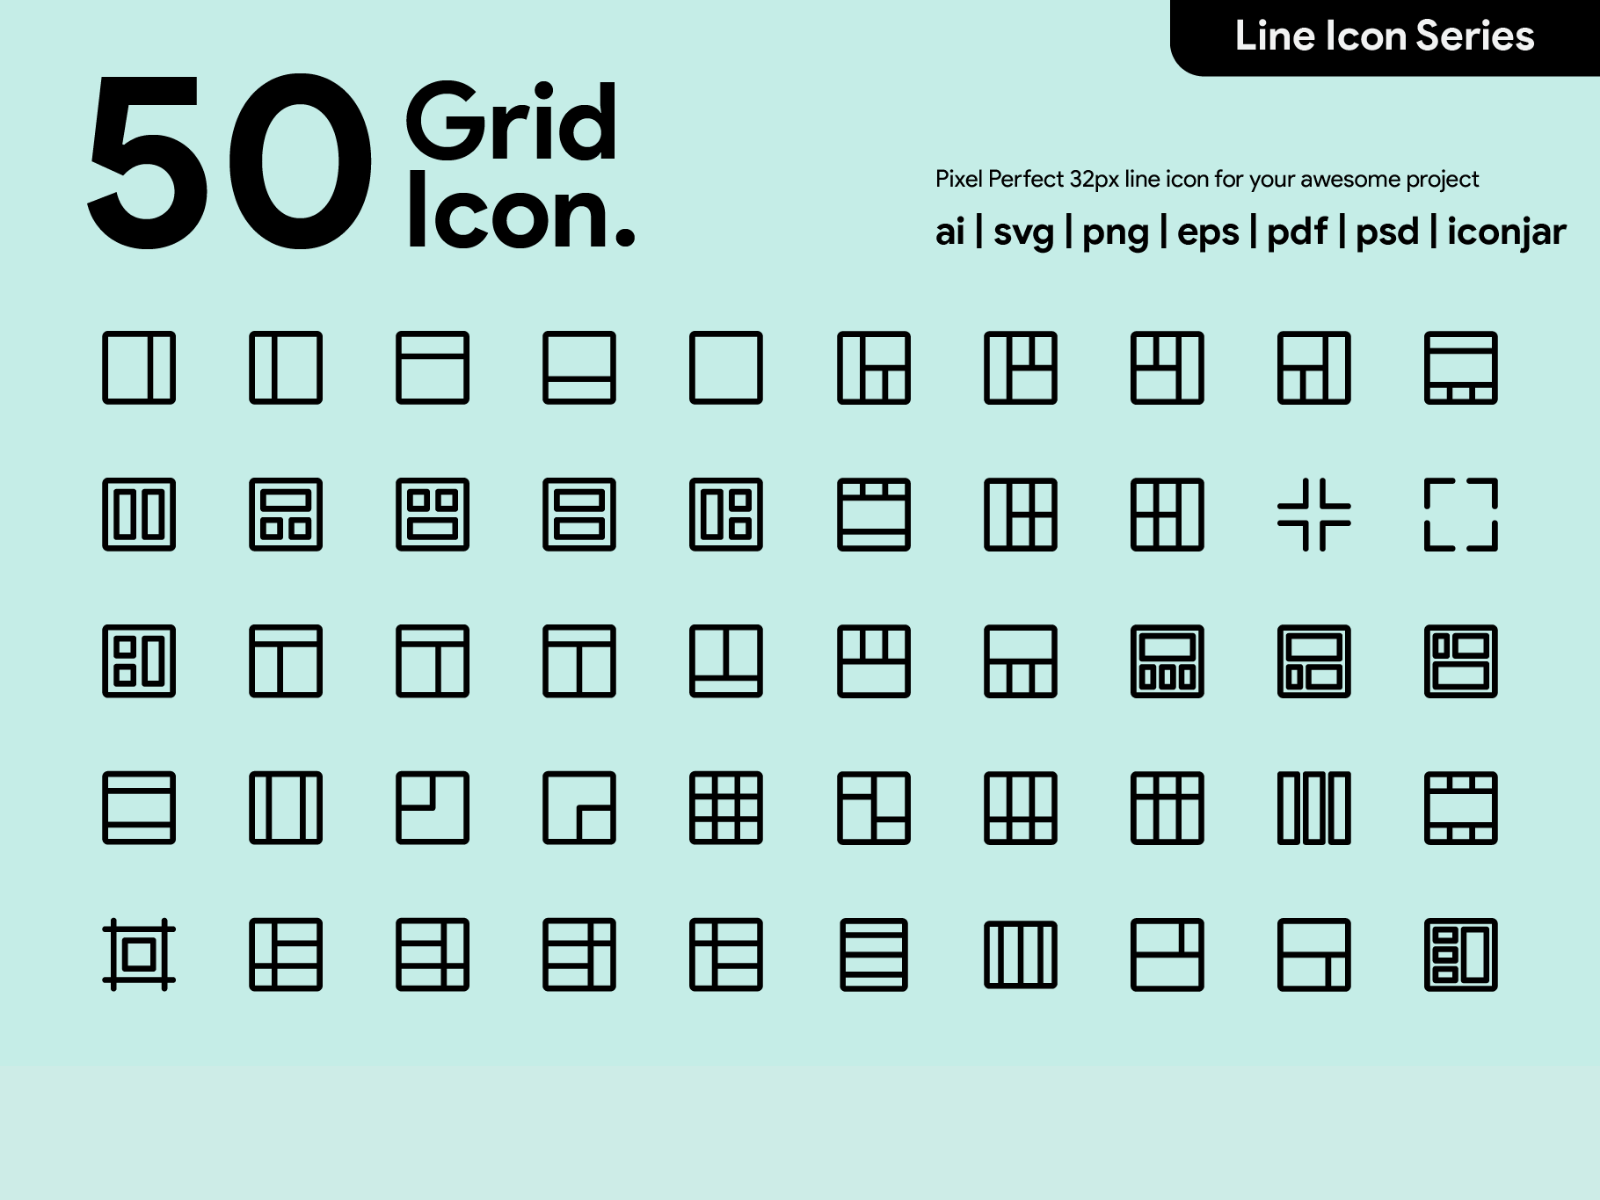 App icons design idea #288: Kawaicon - 50 Grid Line Icon